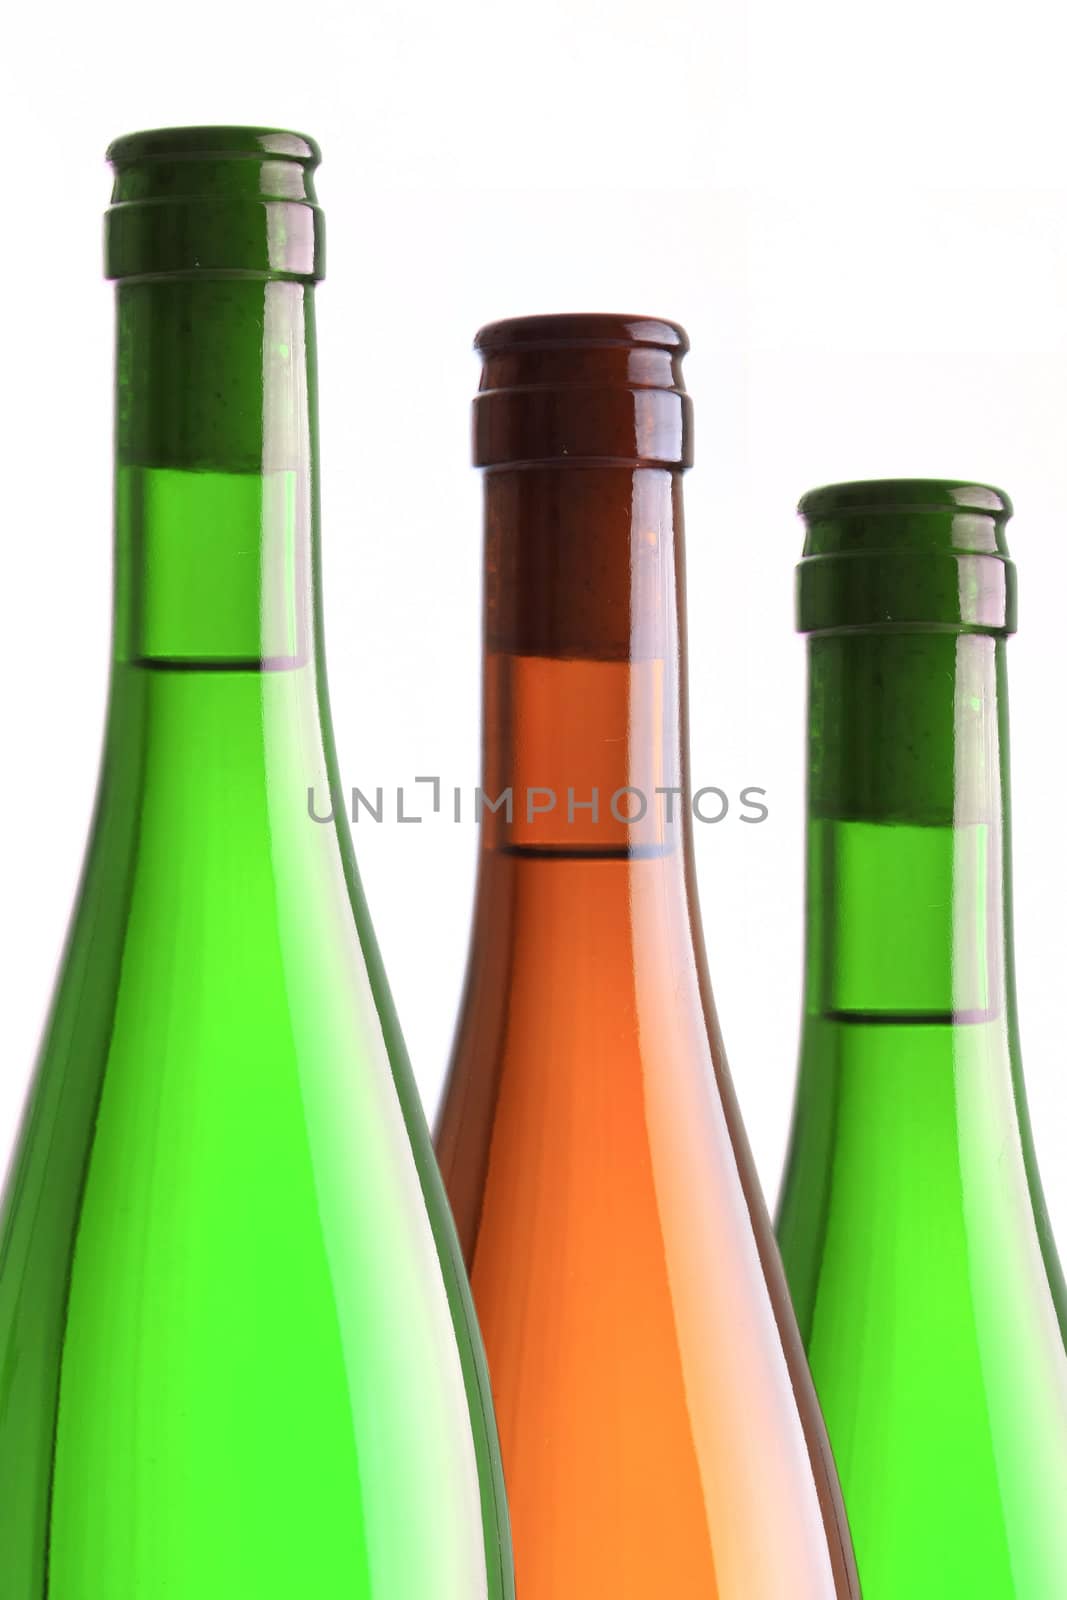 bottles by jfcalheiros